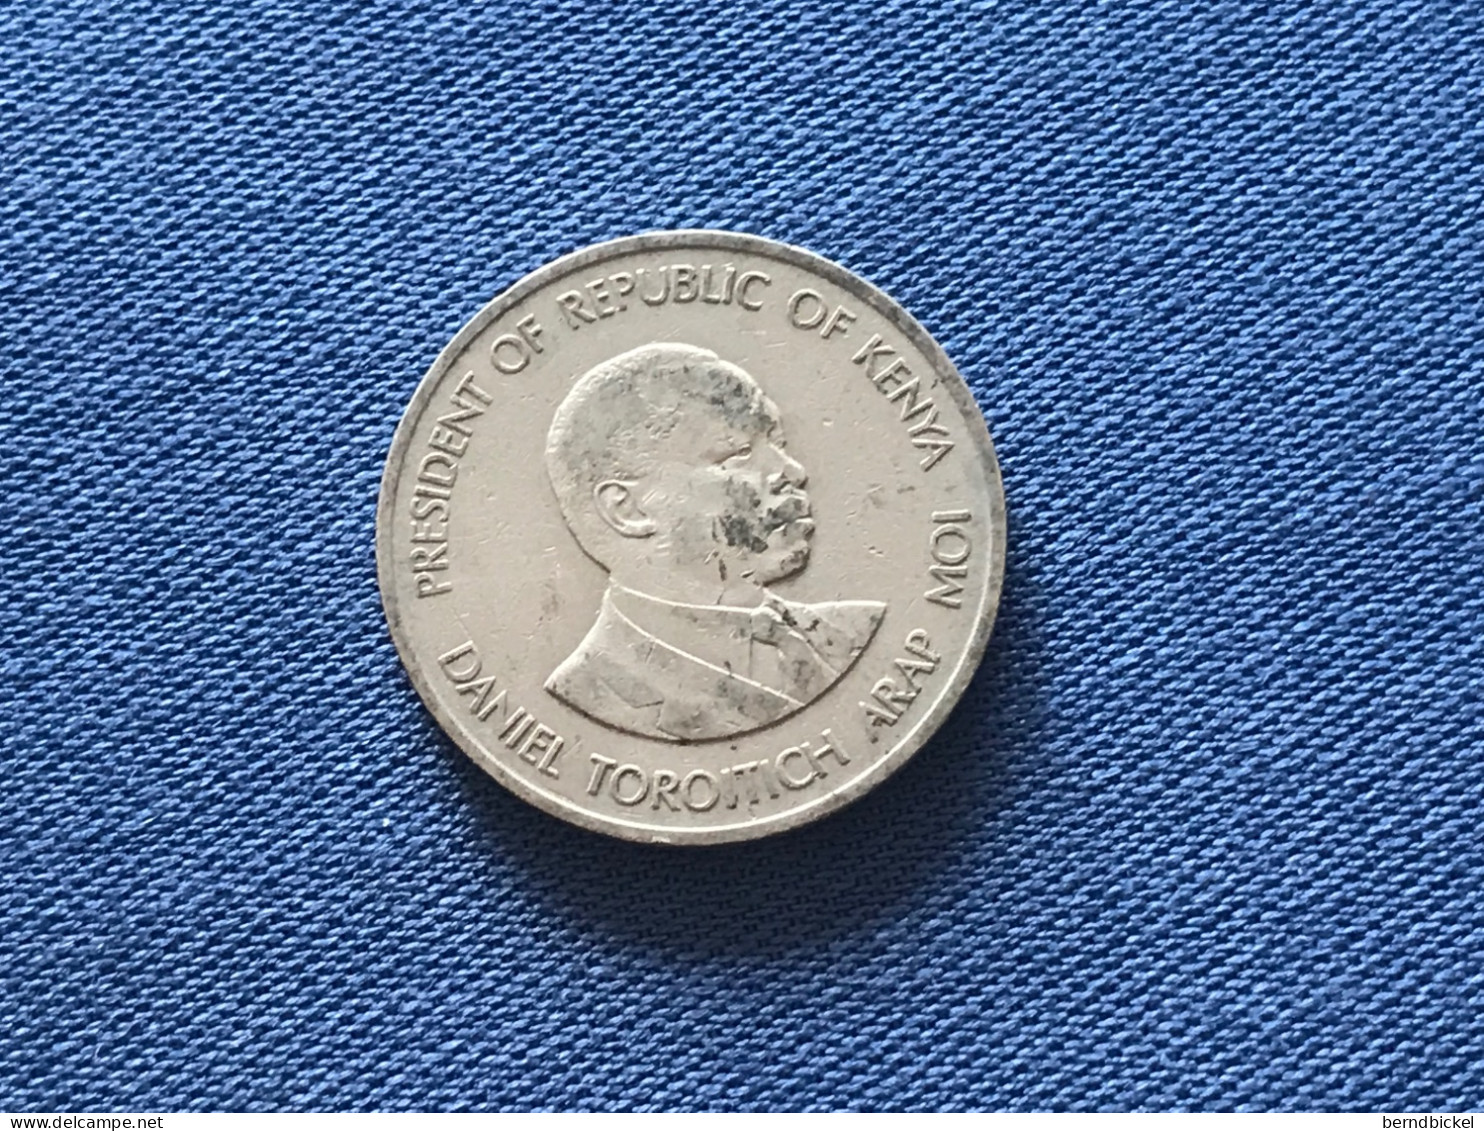 Münze Münzen Umlaufmünze Kenia 1 Shilling 1989 - Kenya